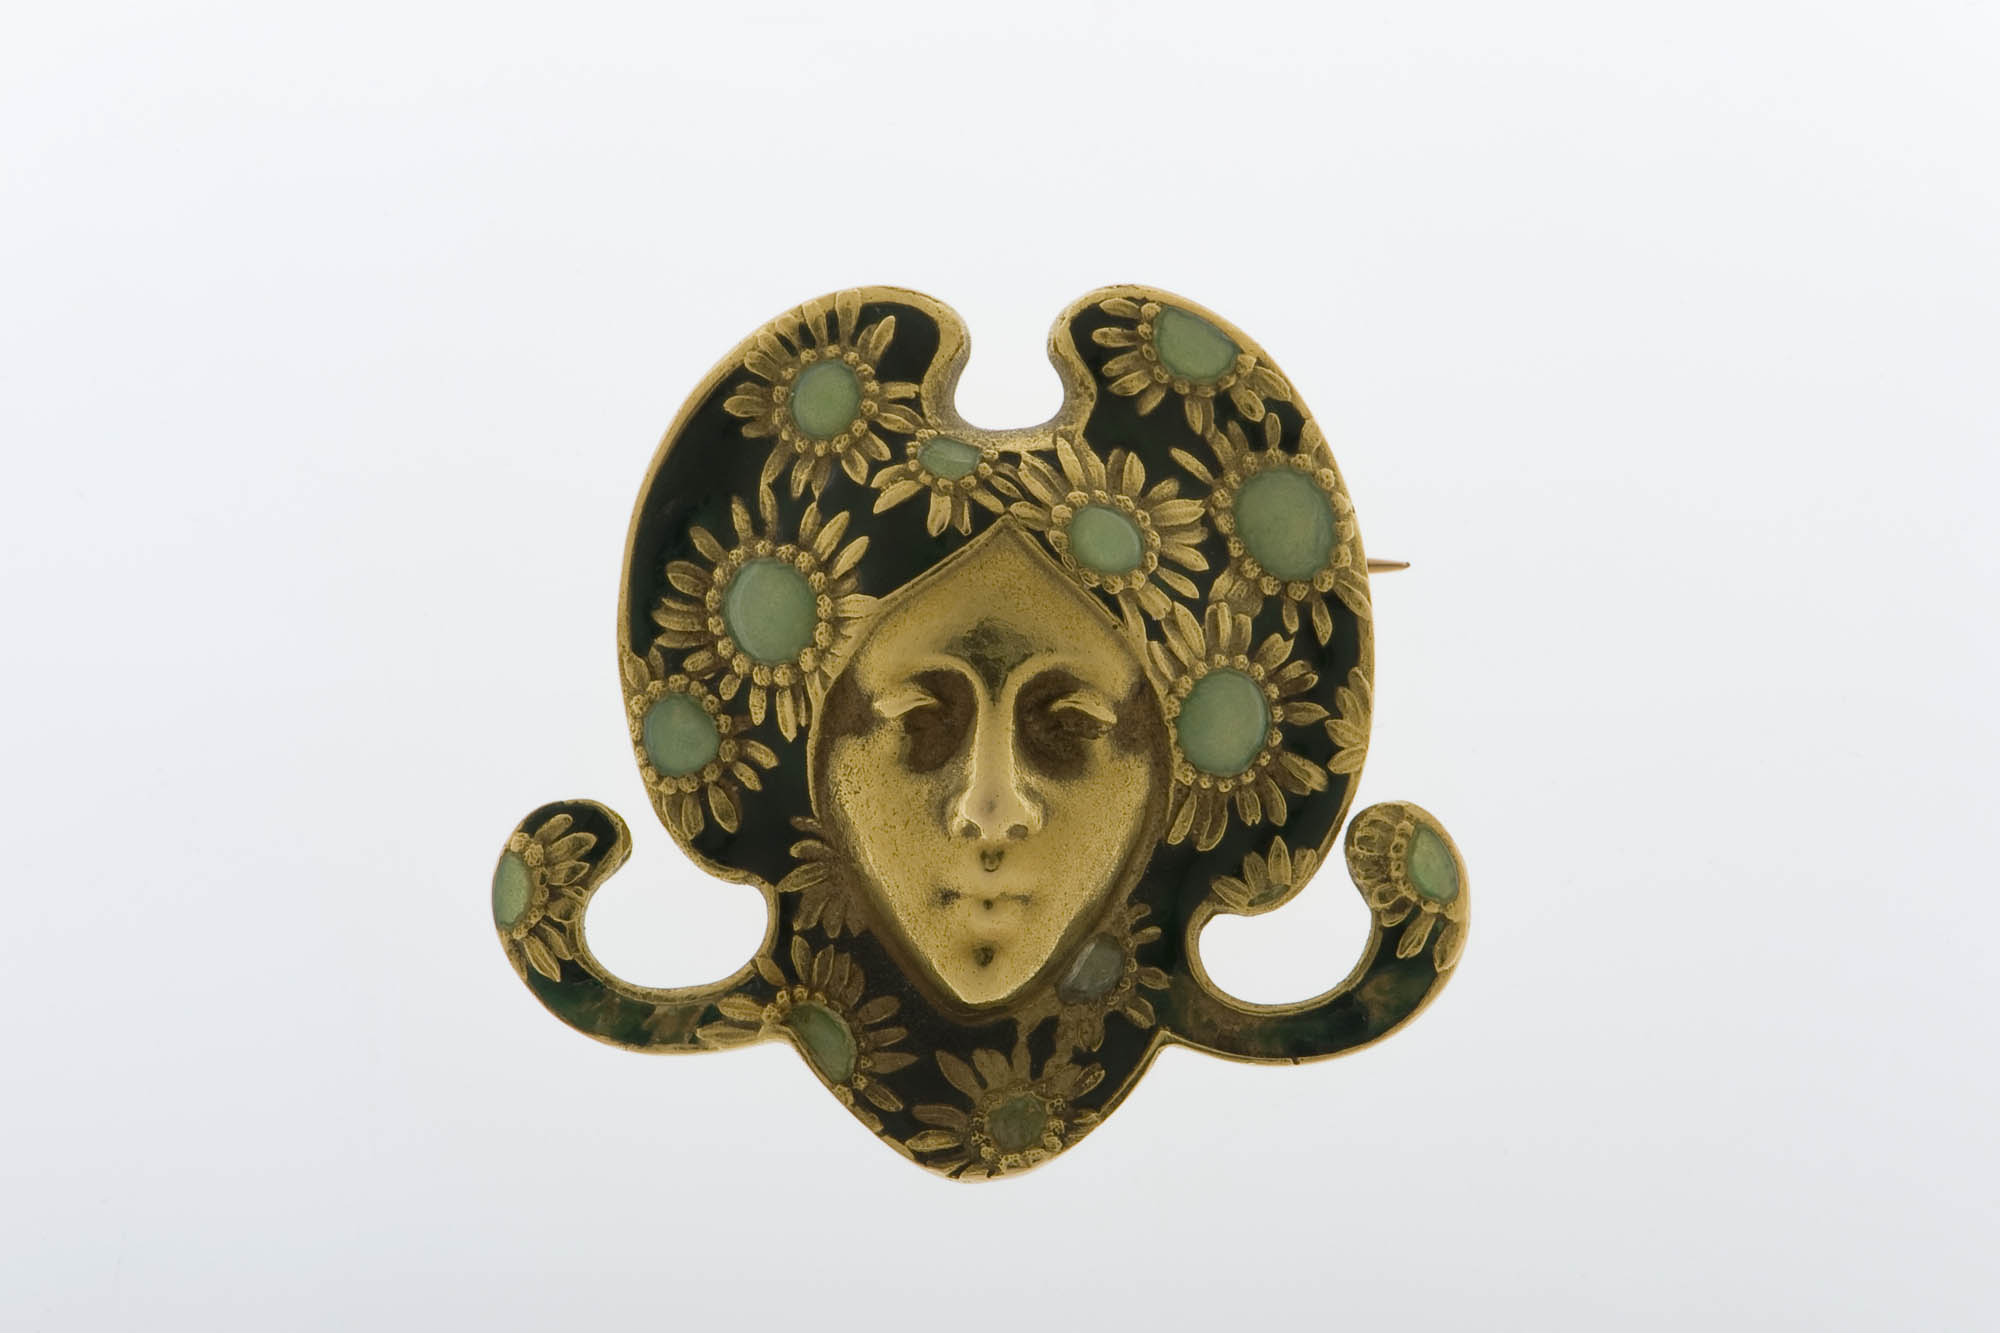 Modell Nr. 502: Serpent René Lalique Flacon de parfum